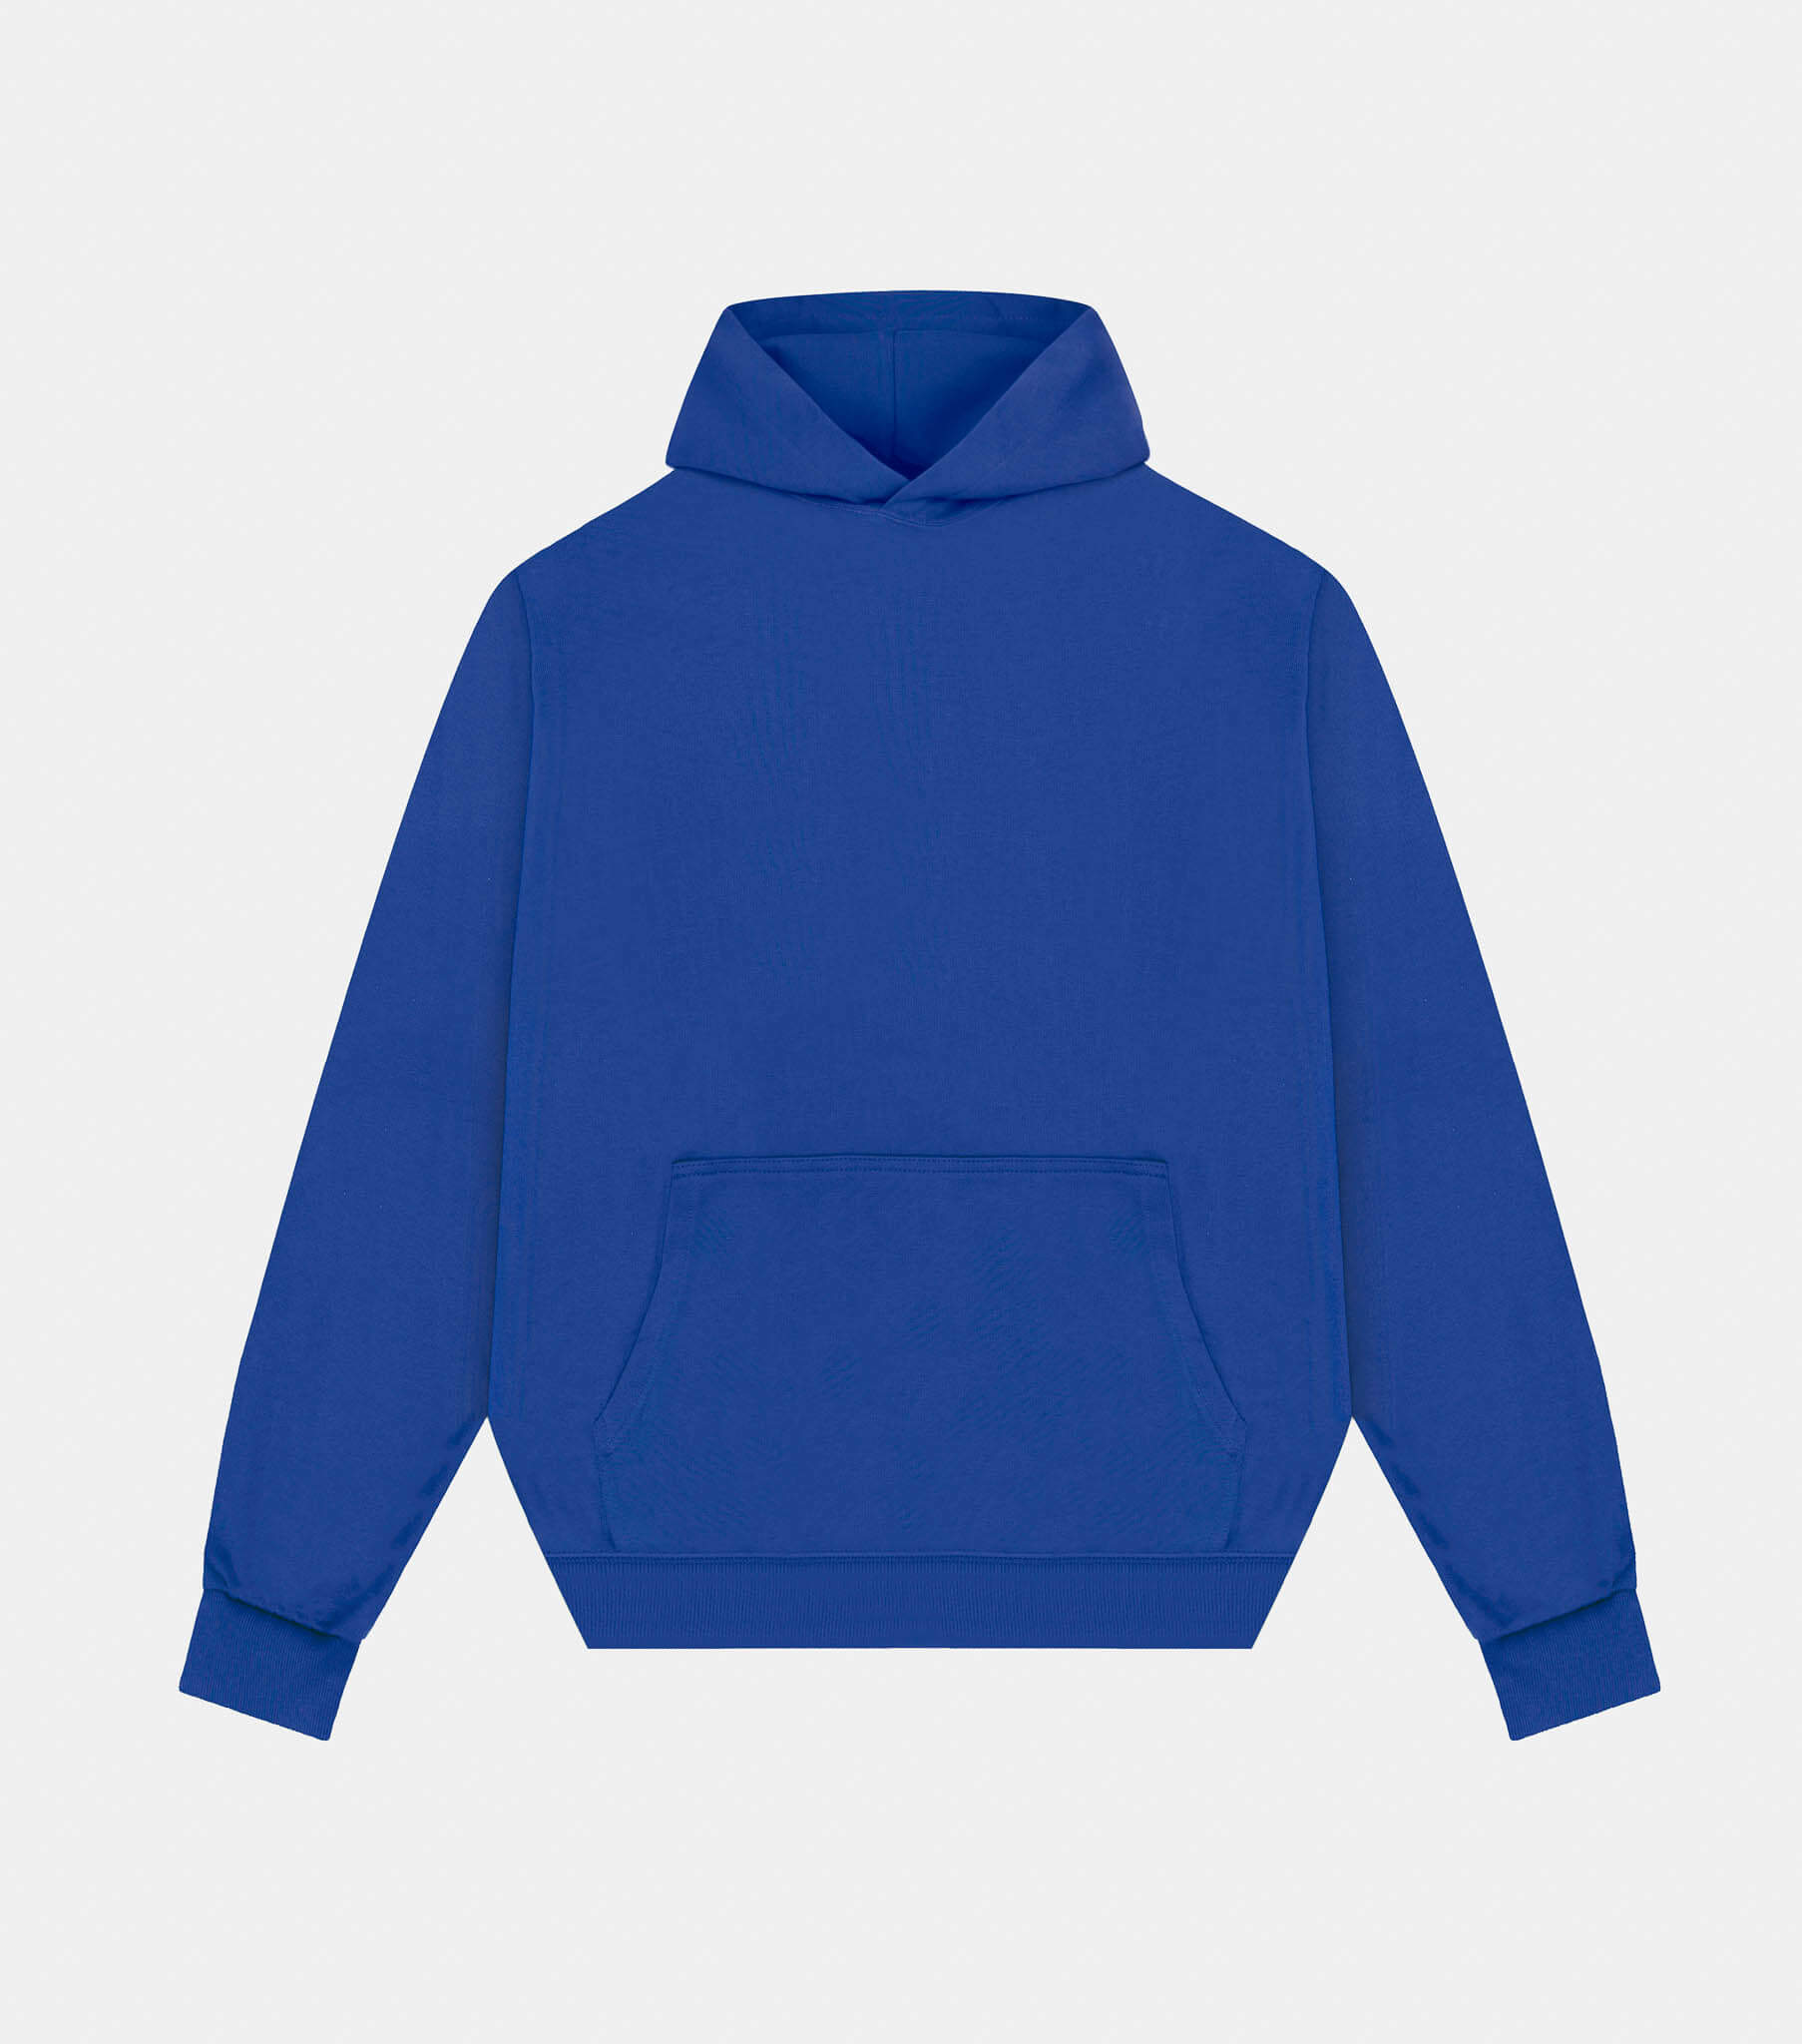 https://studios-tc.com/wp-content/uploads/2021/10/oversize-hoodie-royal-blue-front.jpg